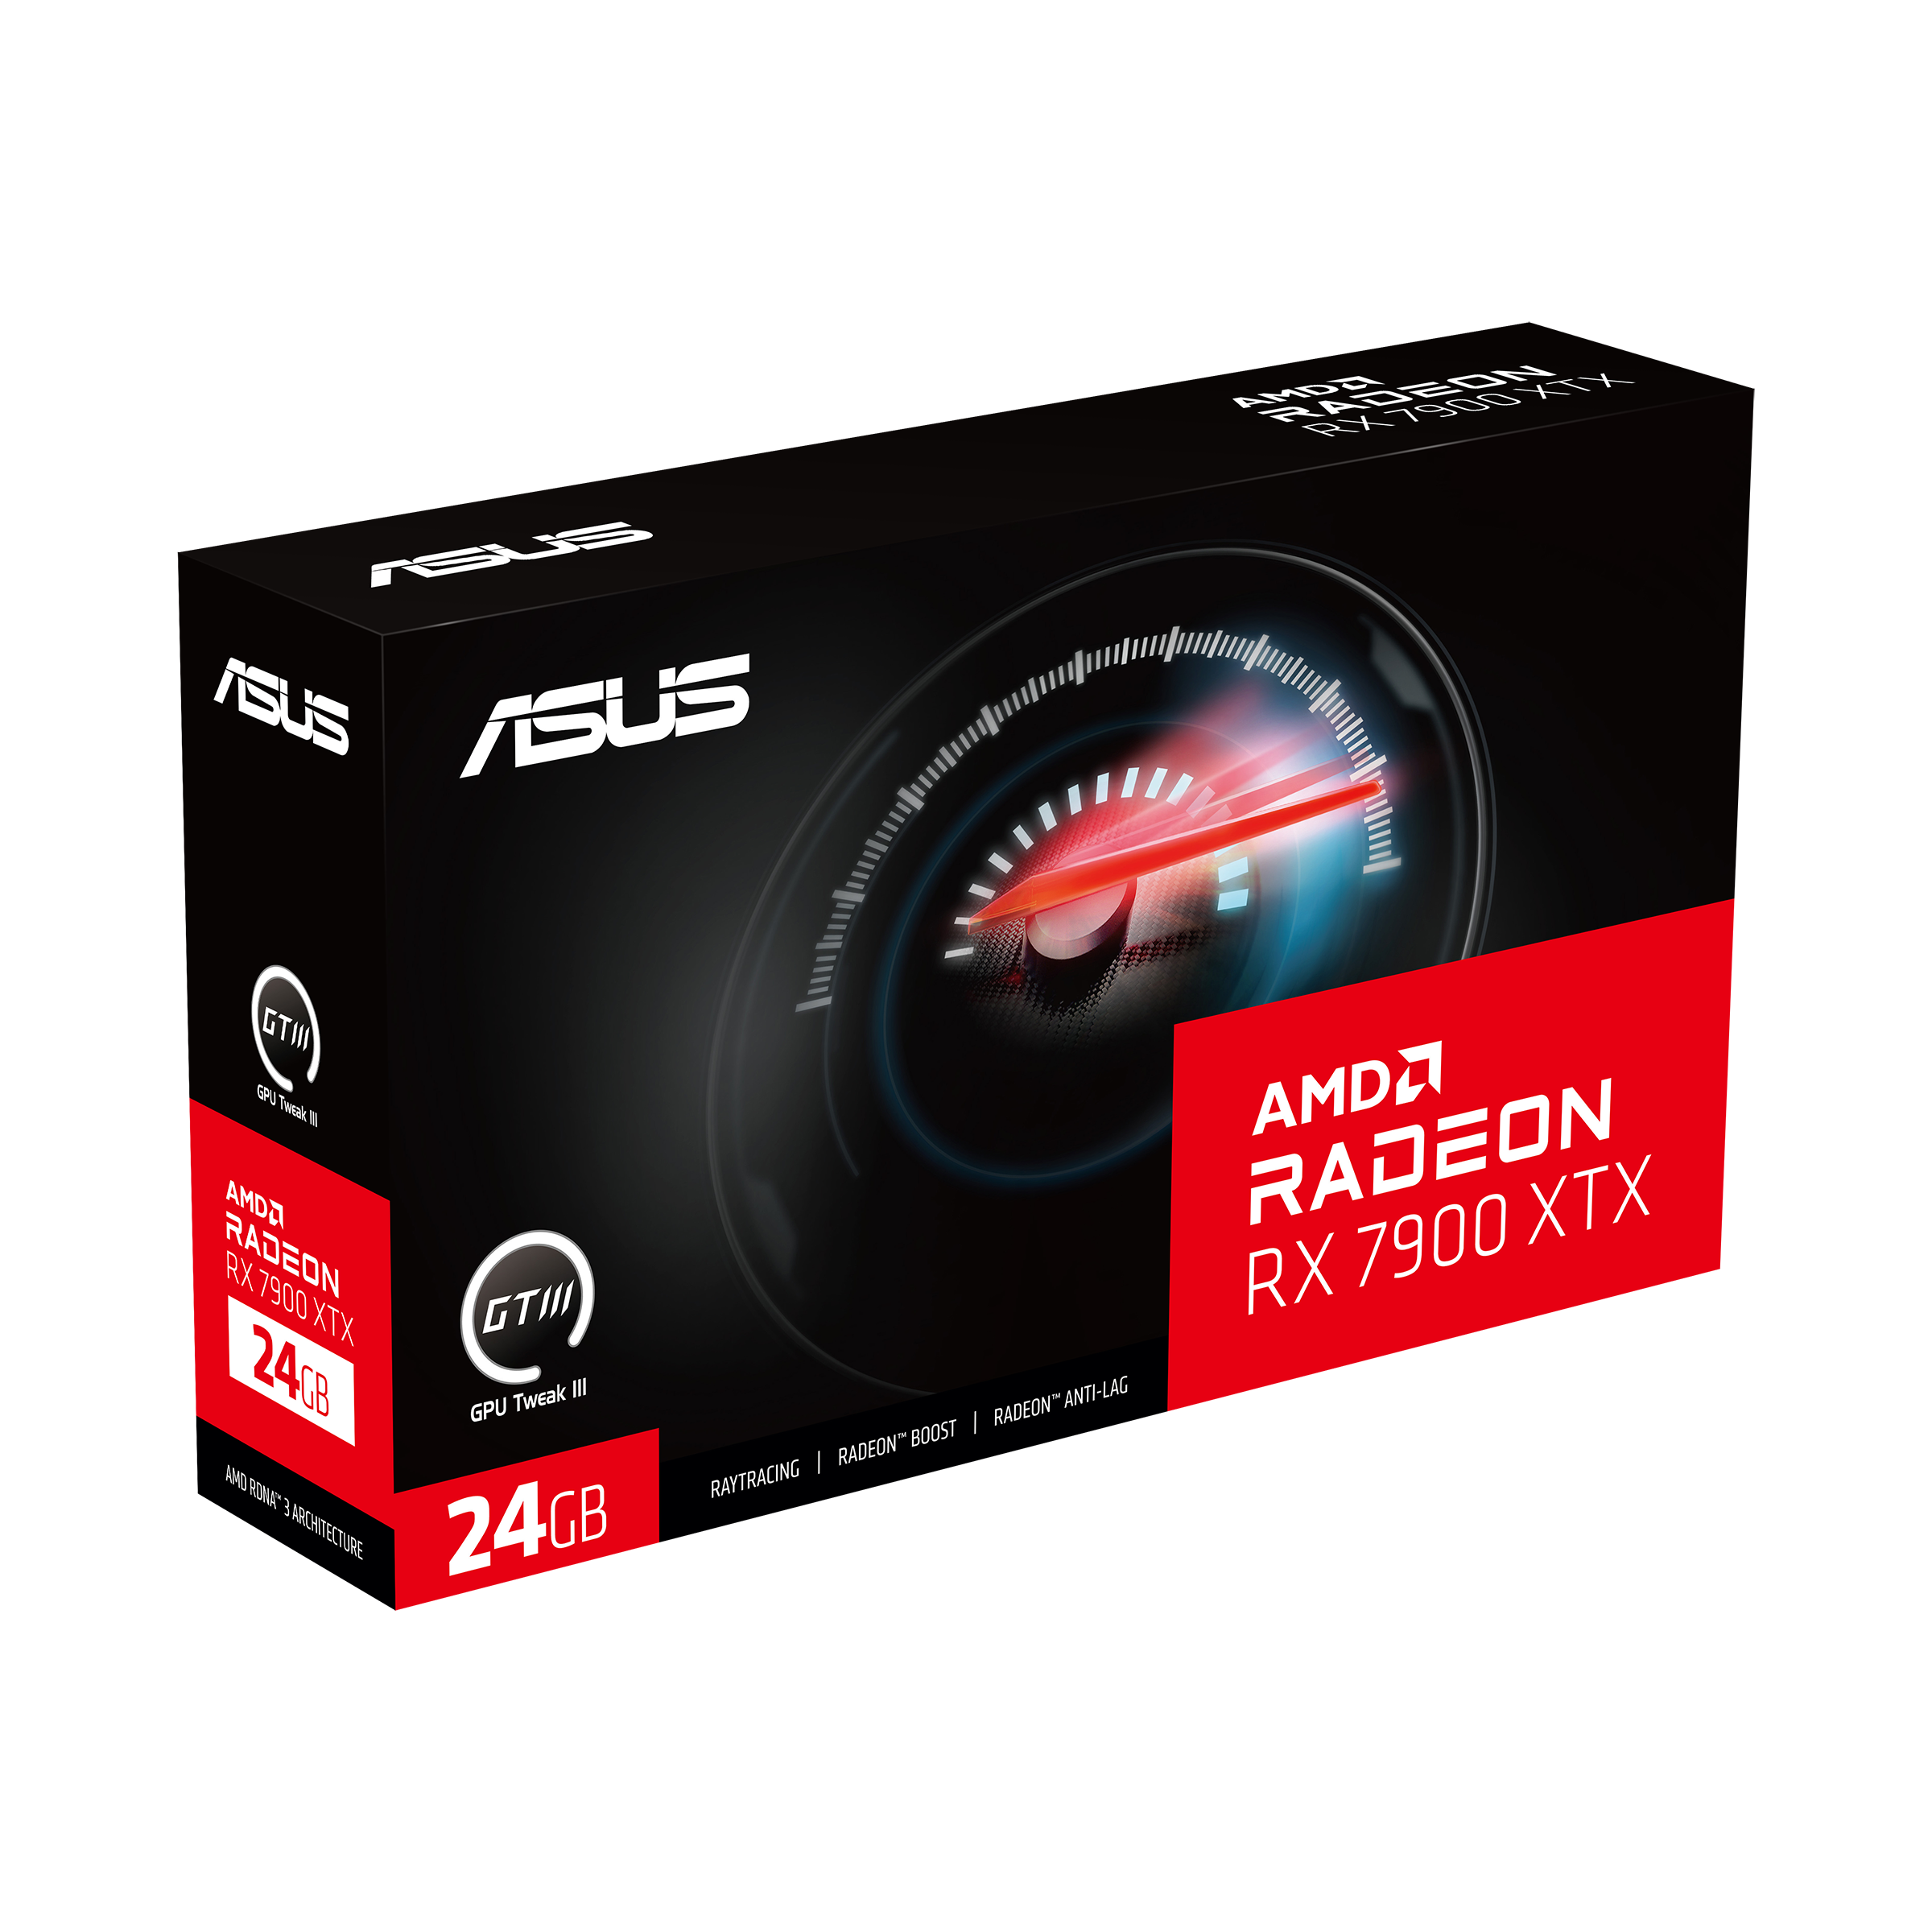 AMD RX 7900 XTX and RX 7900 XT review: great GPUs, no Nvidia